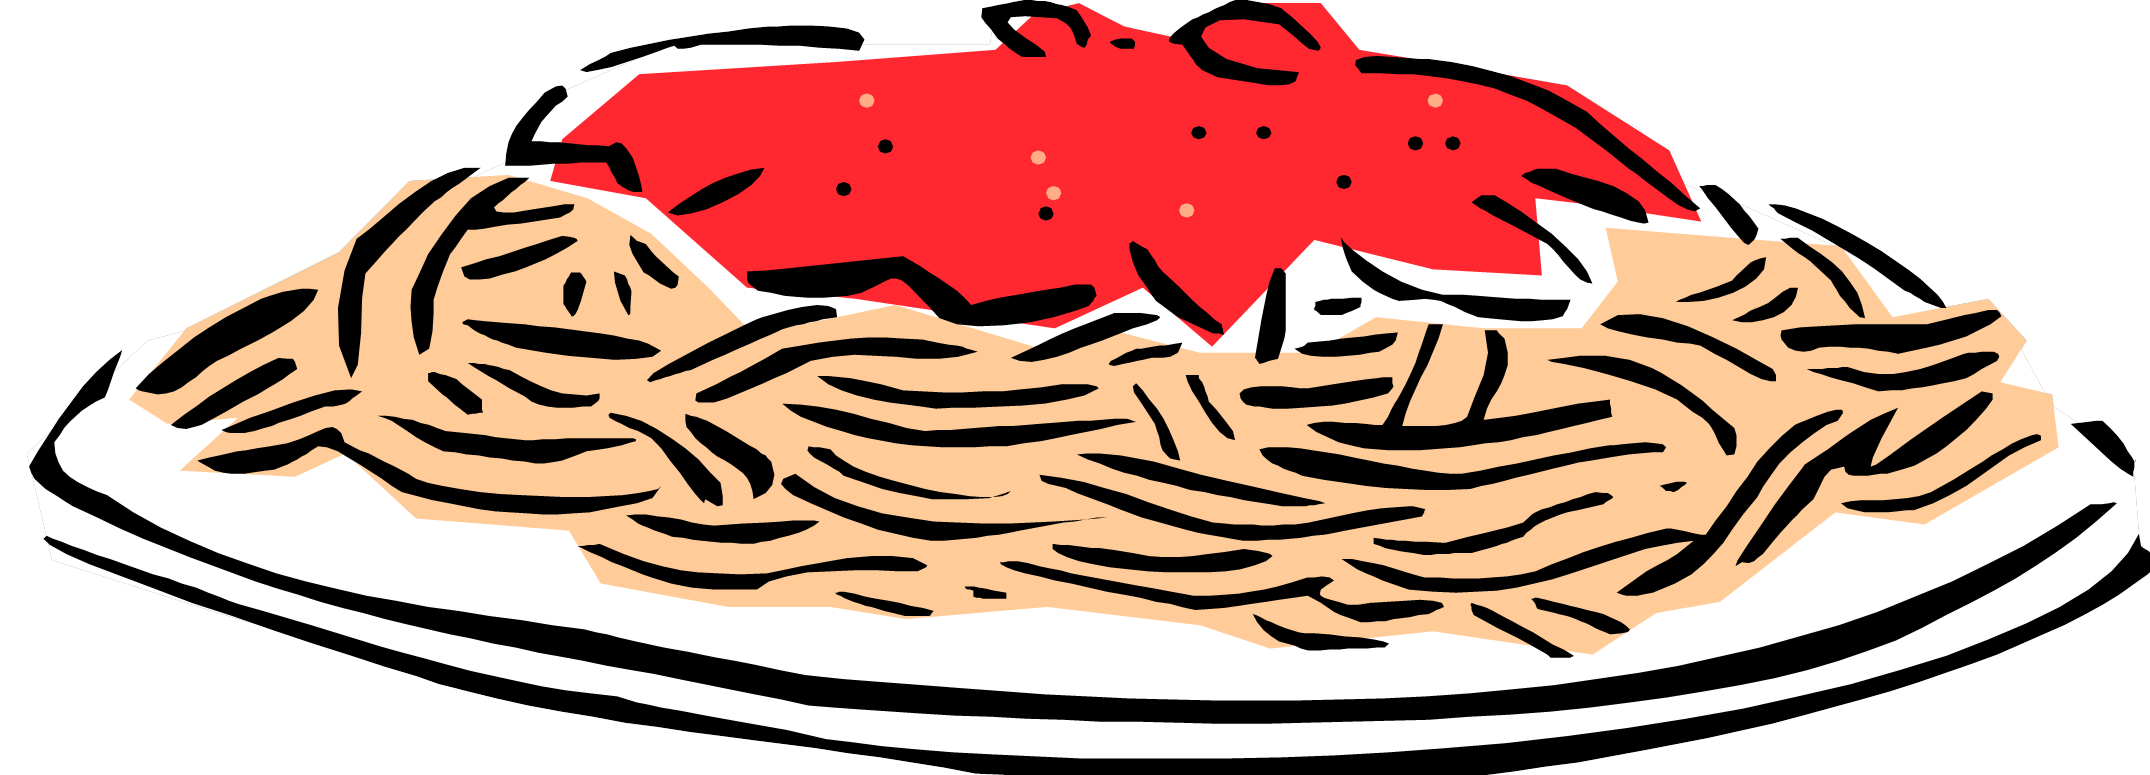 Spaghetti clip art png. Clipart fish dinner